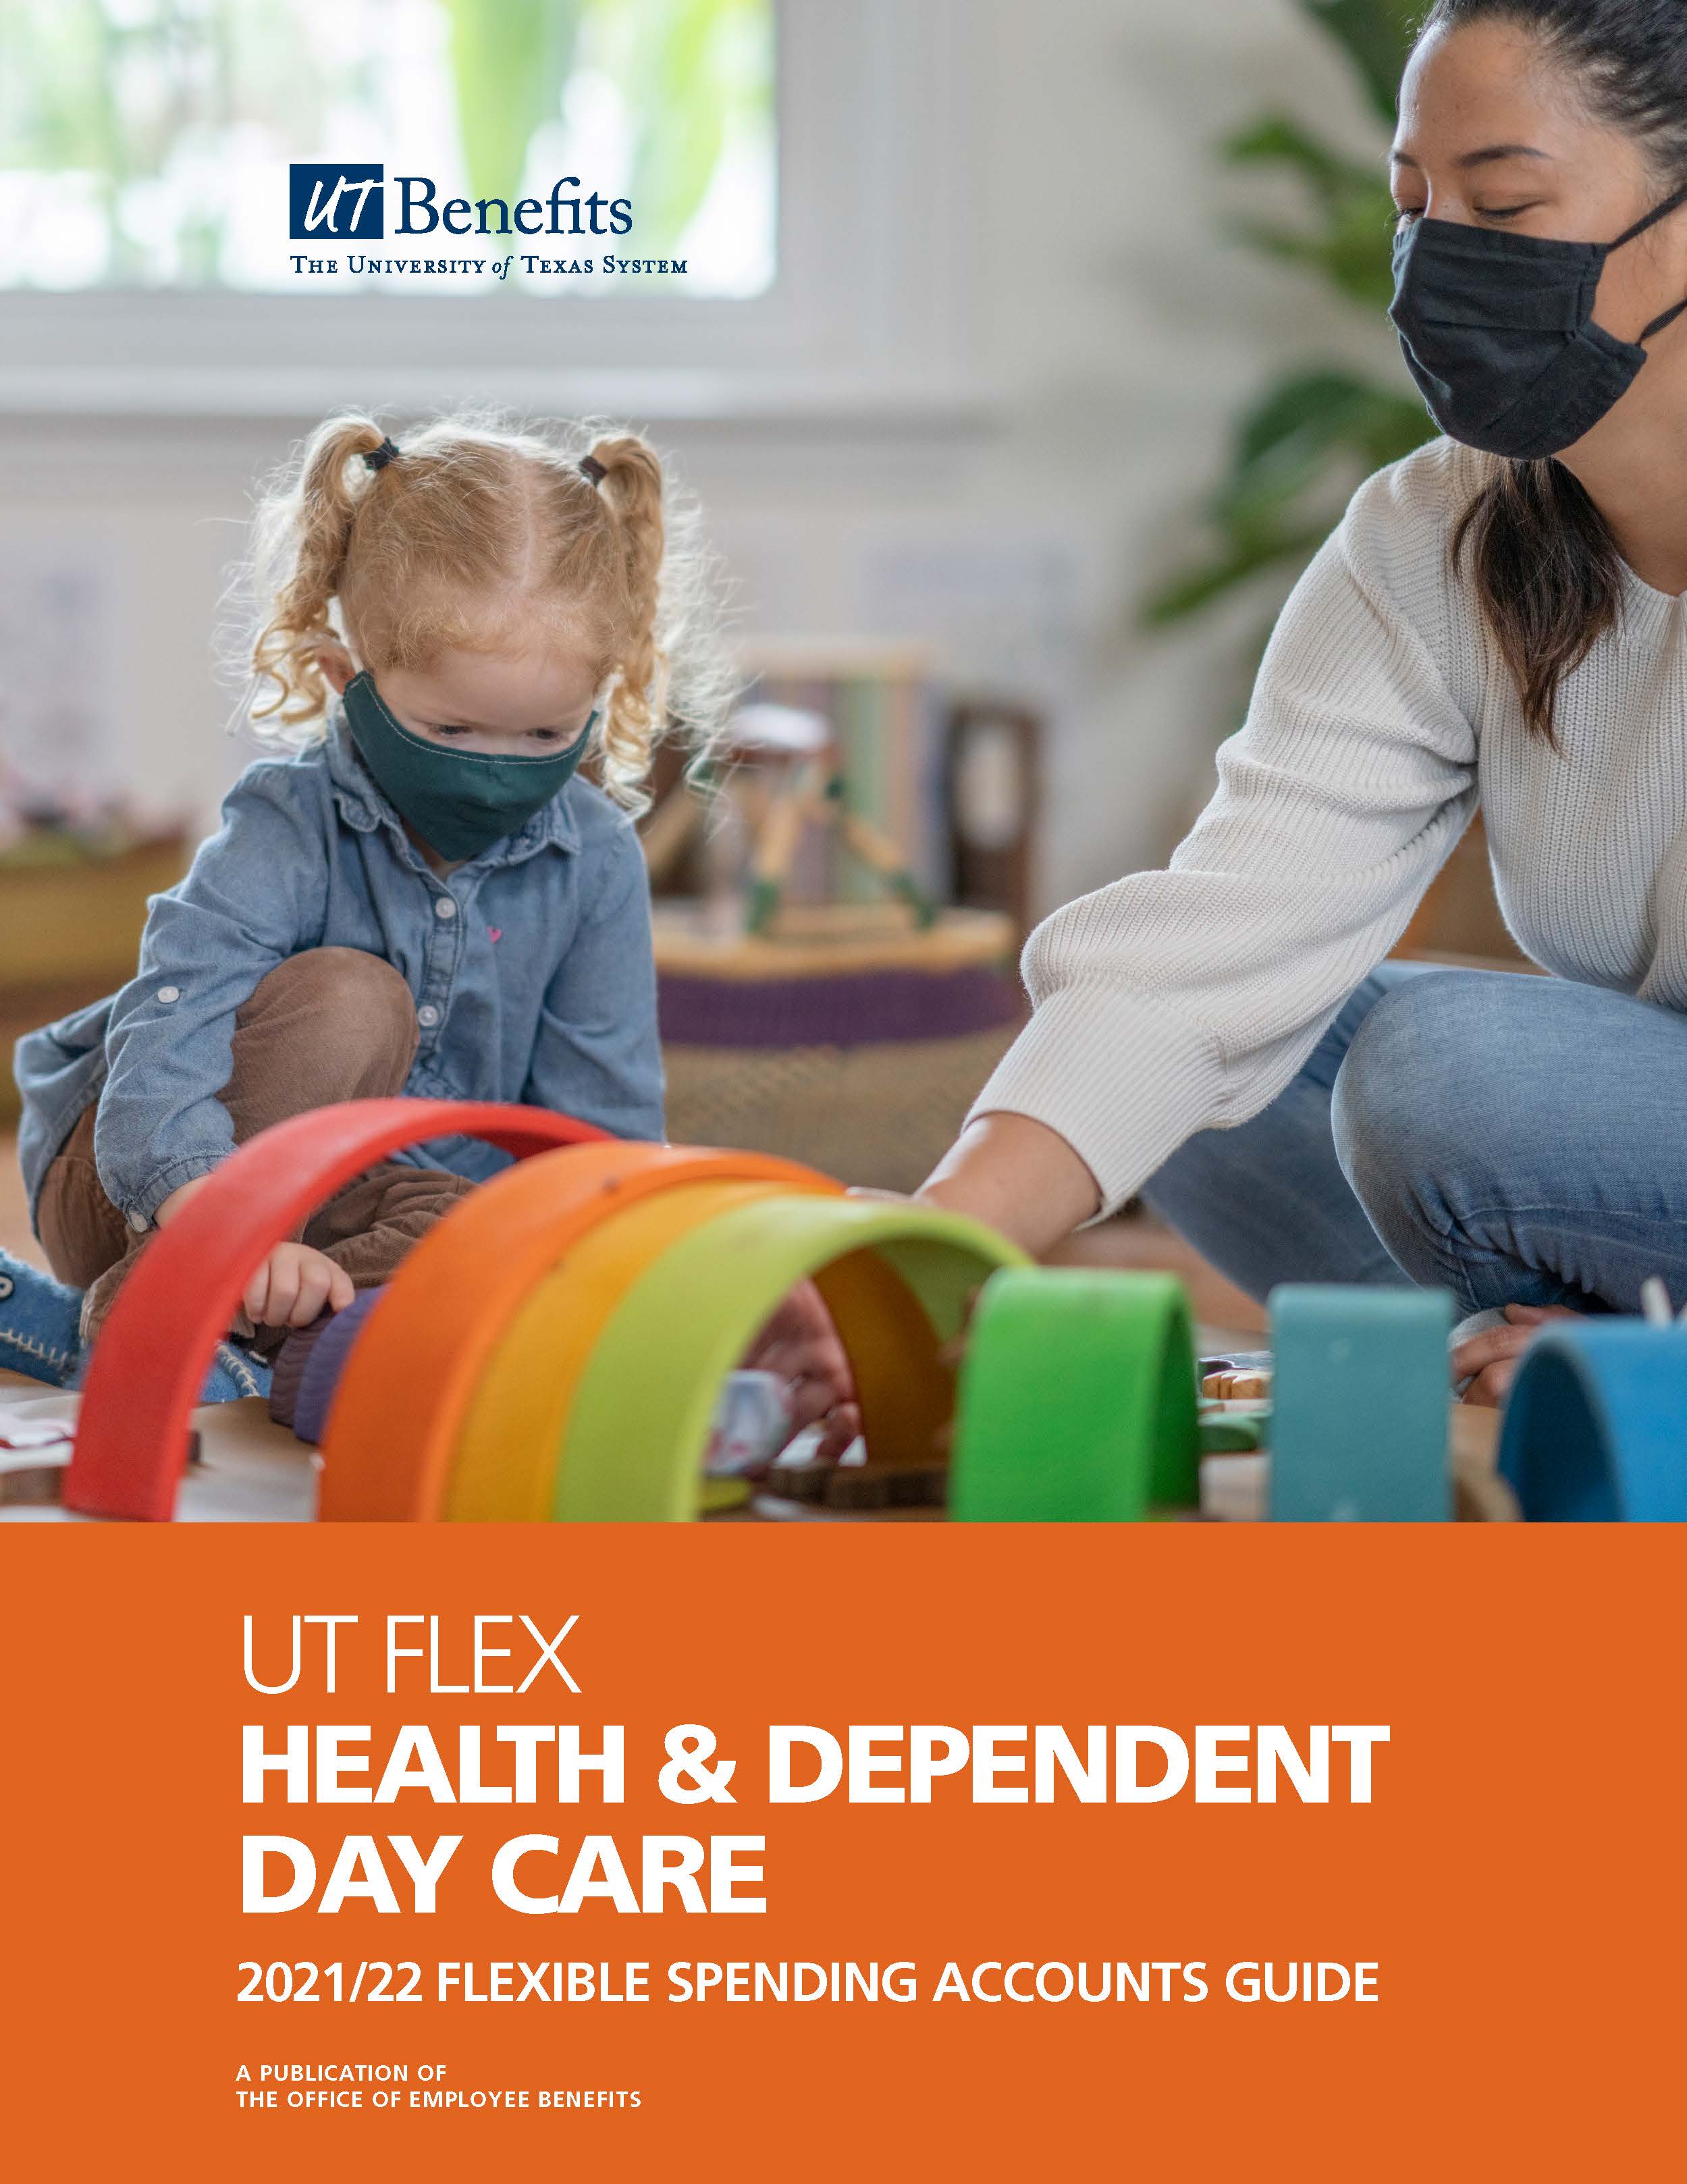 ut flex benefits guide cover